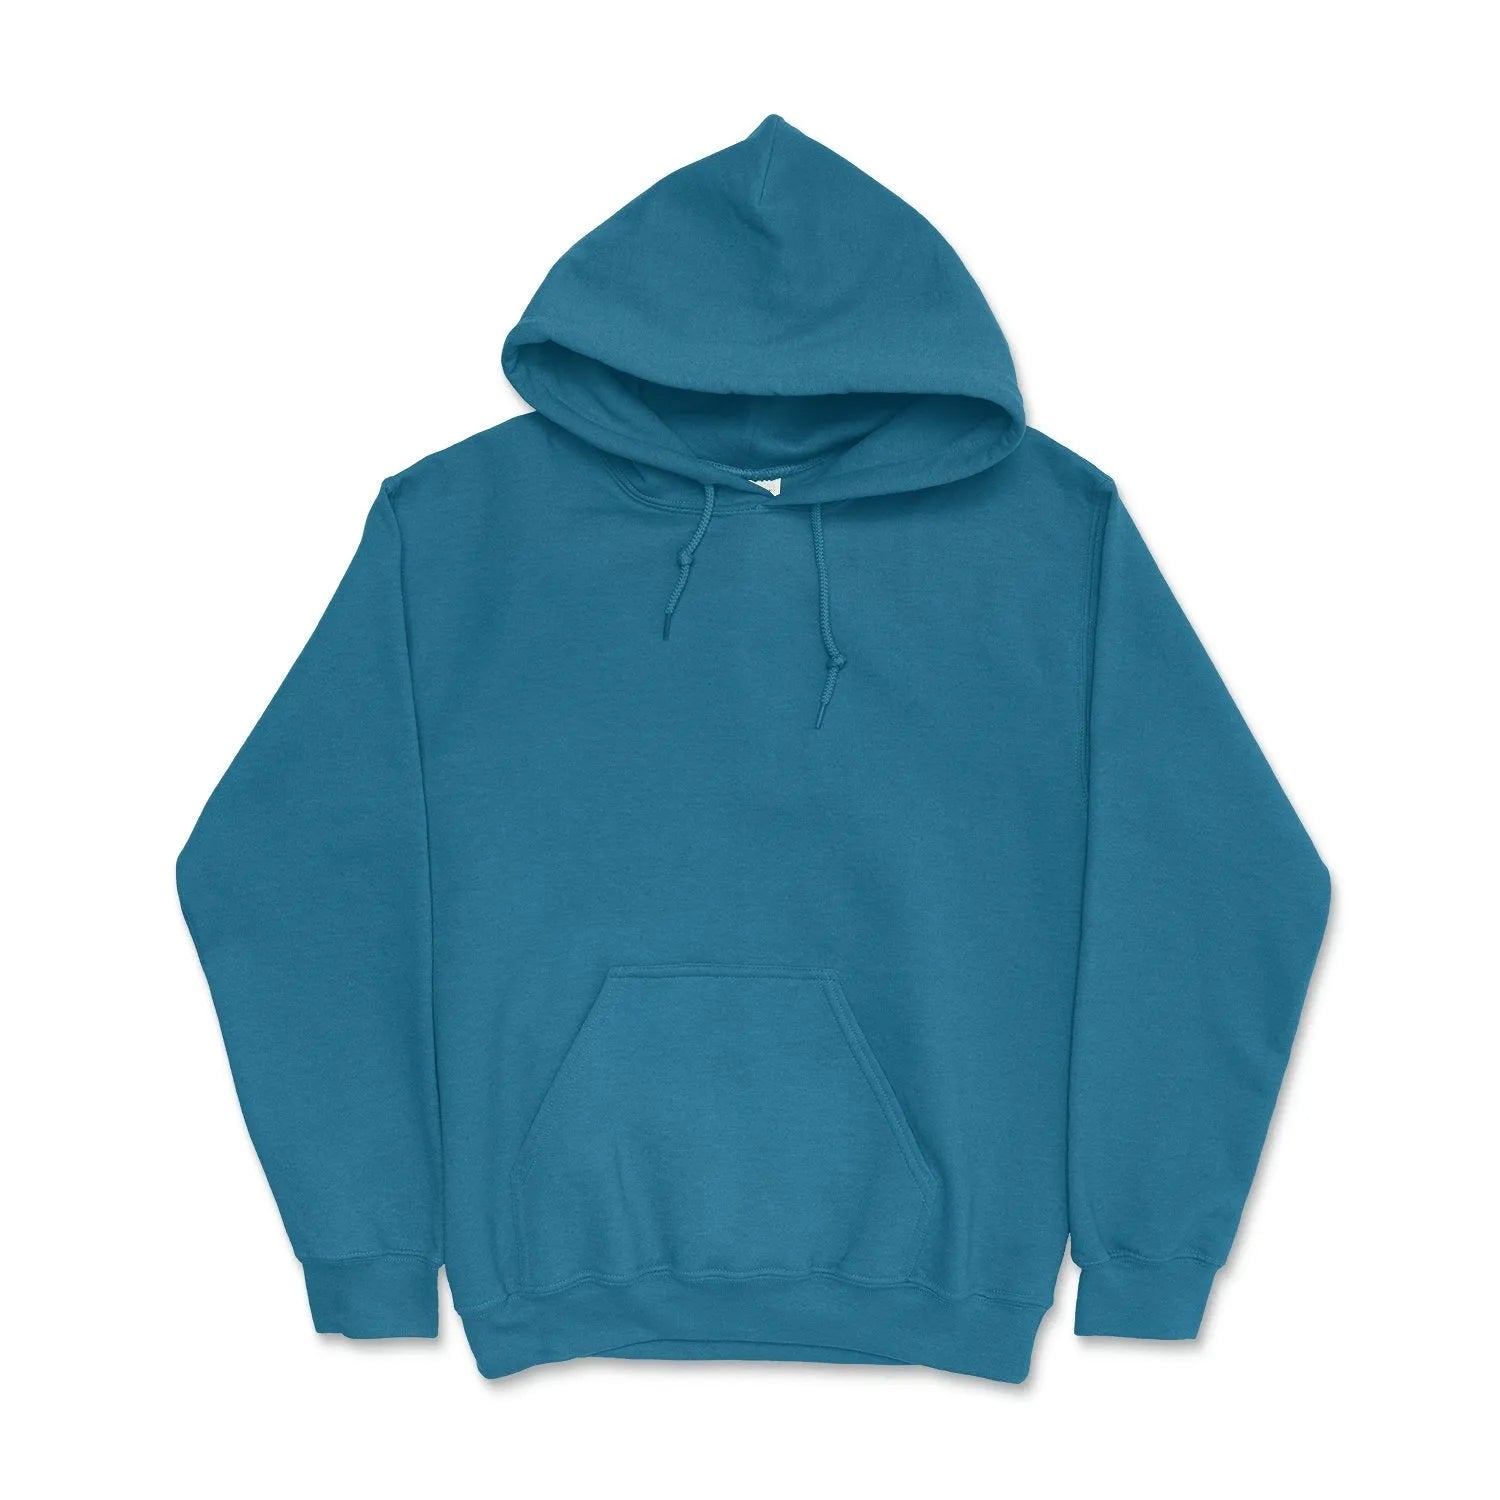 Gildan Heavy Blend Hooded sweatshirt - 18500